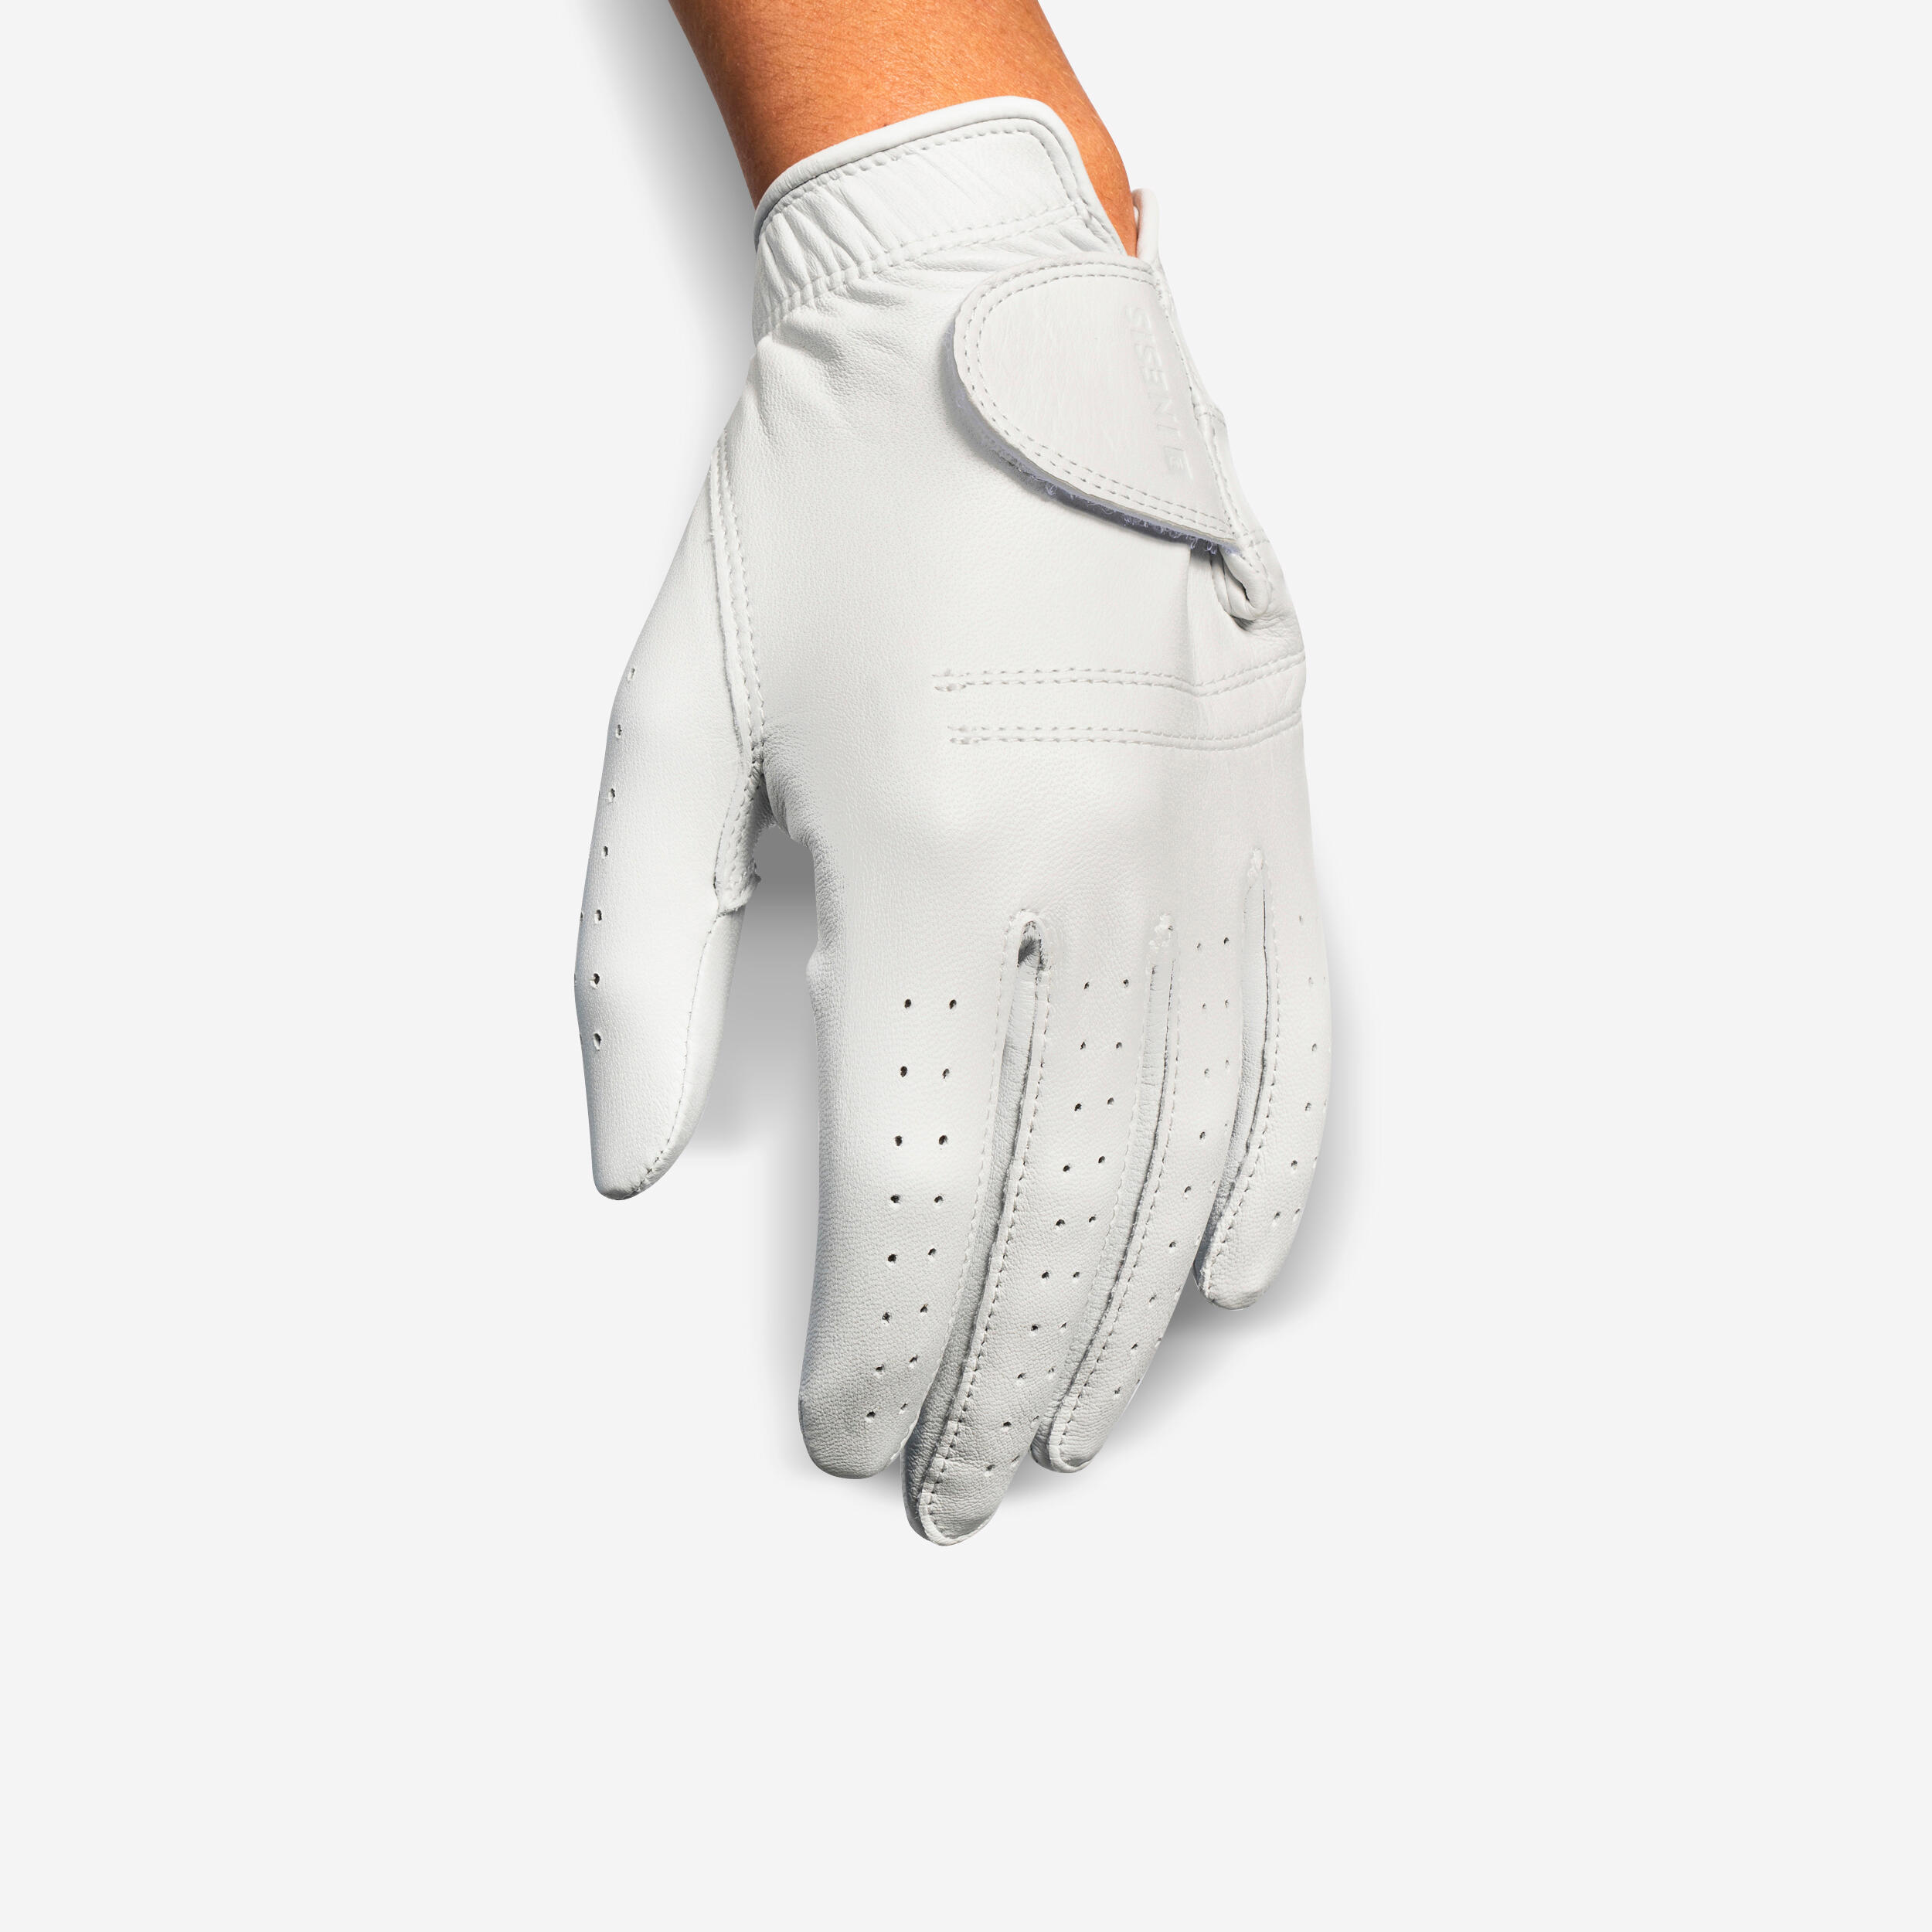 Women's golf right-handed Tour glove white 1/4